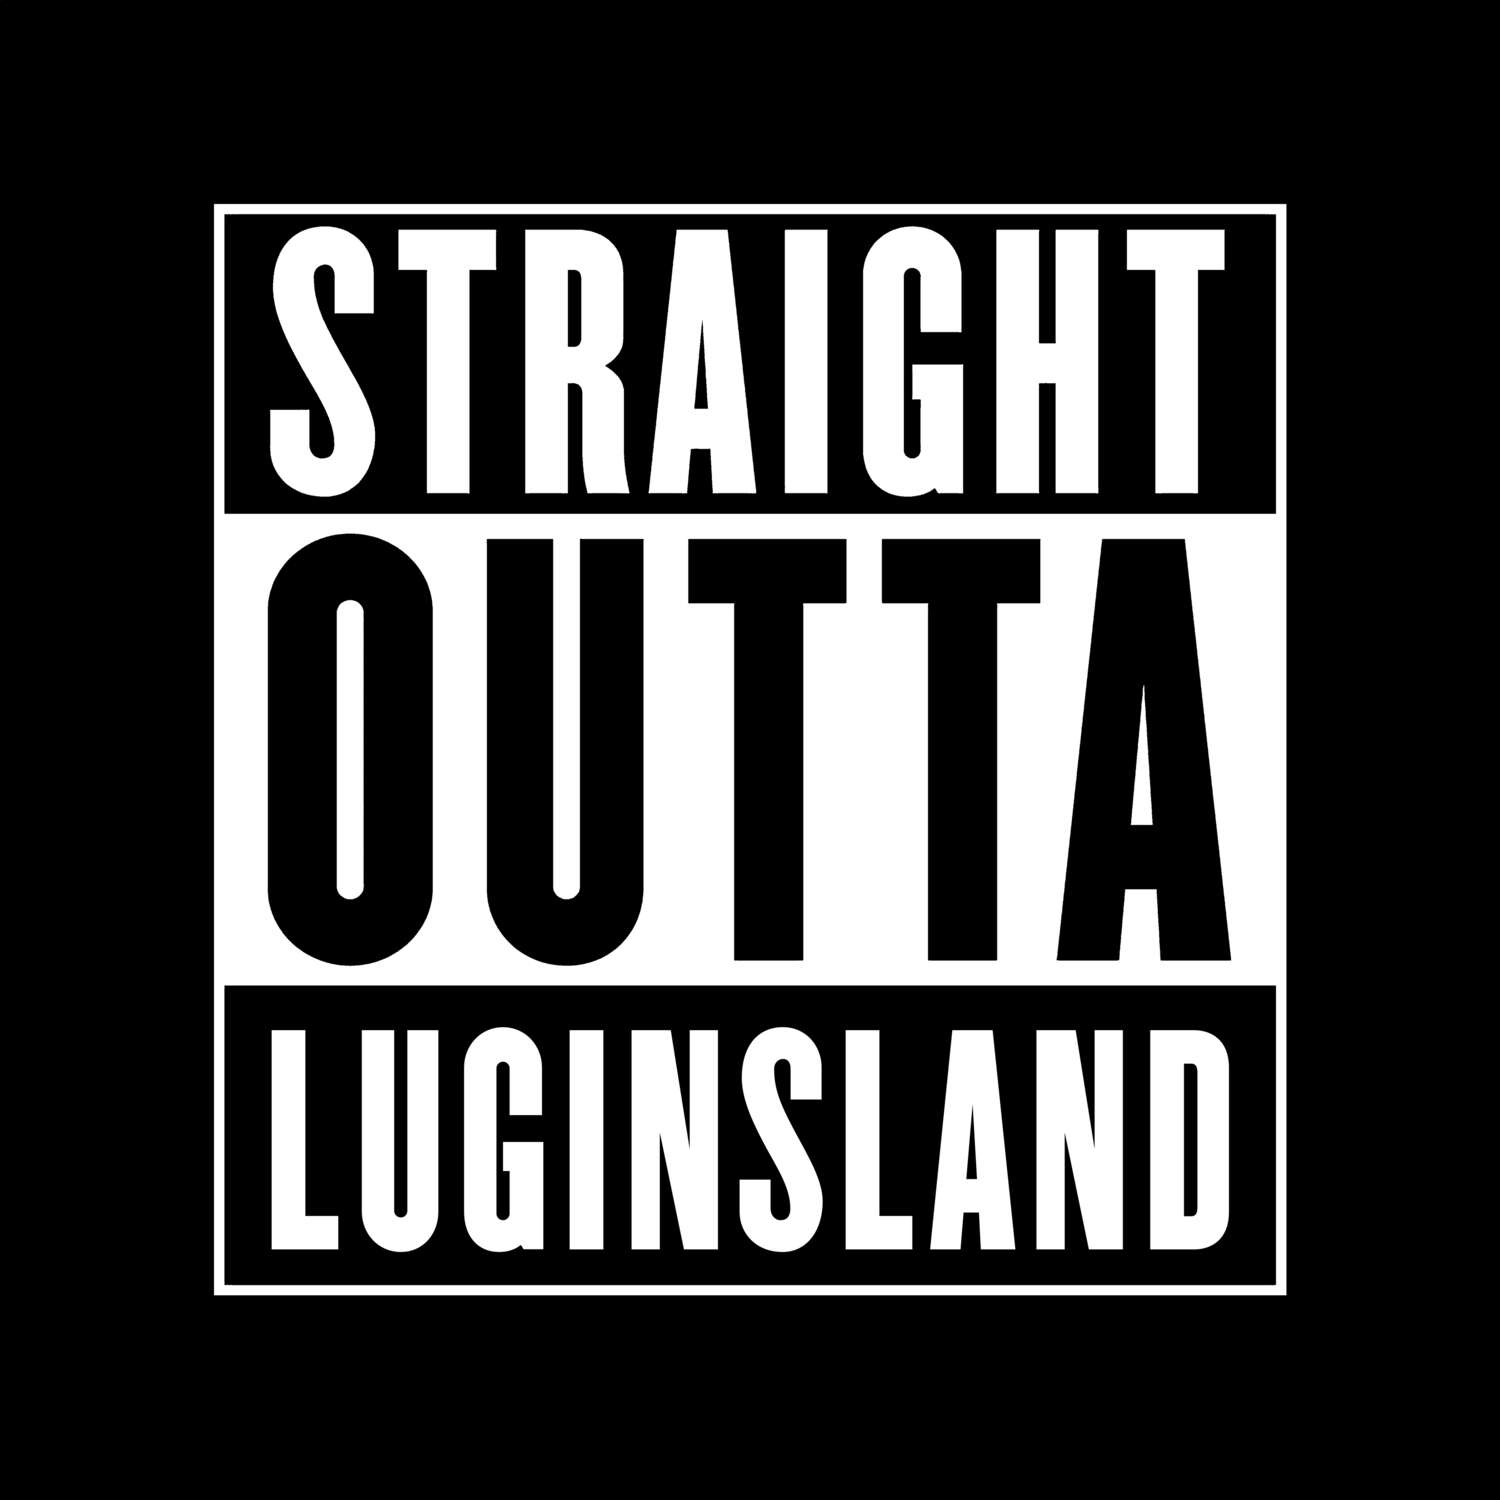 Luginsland T-Shirt »Straight Outta«